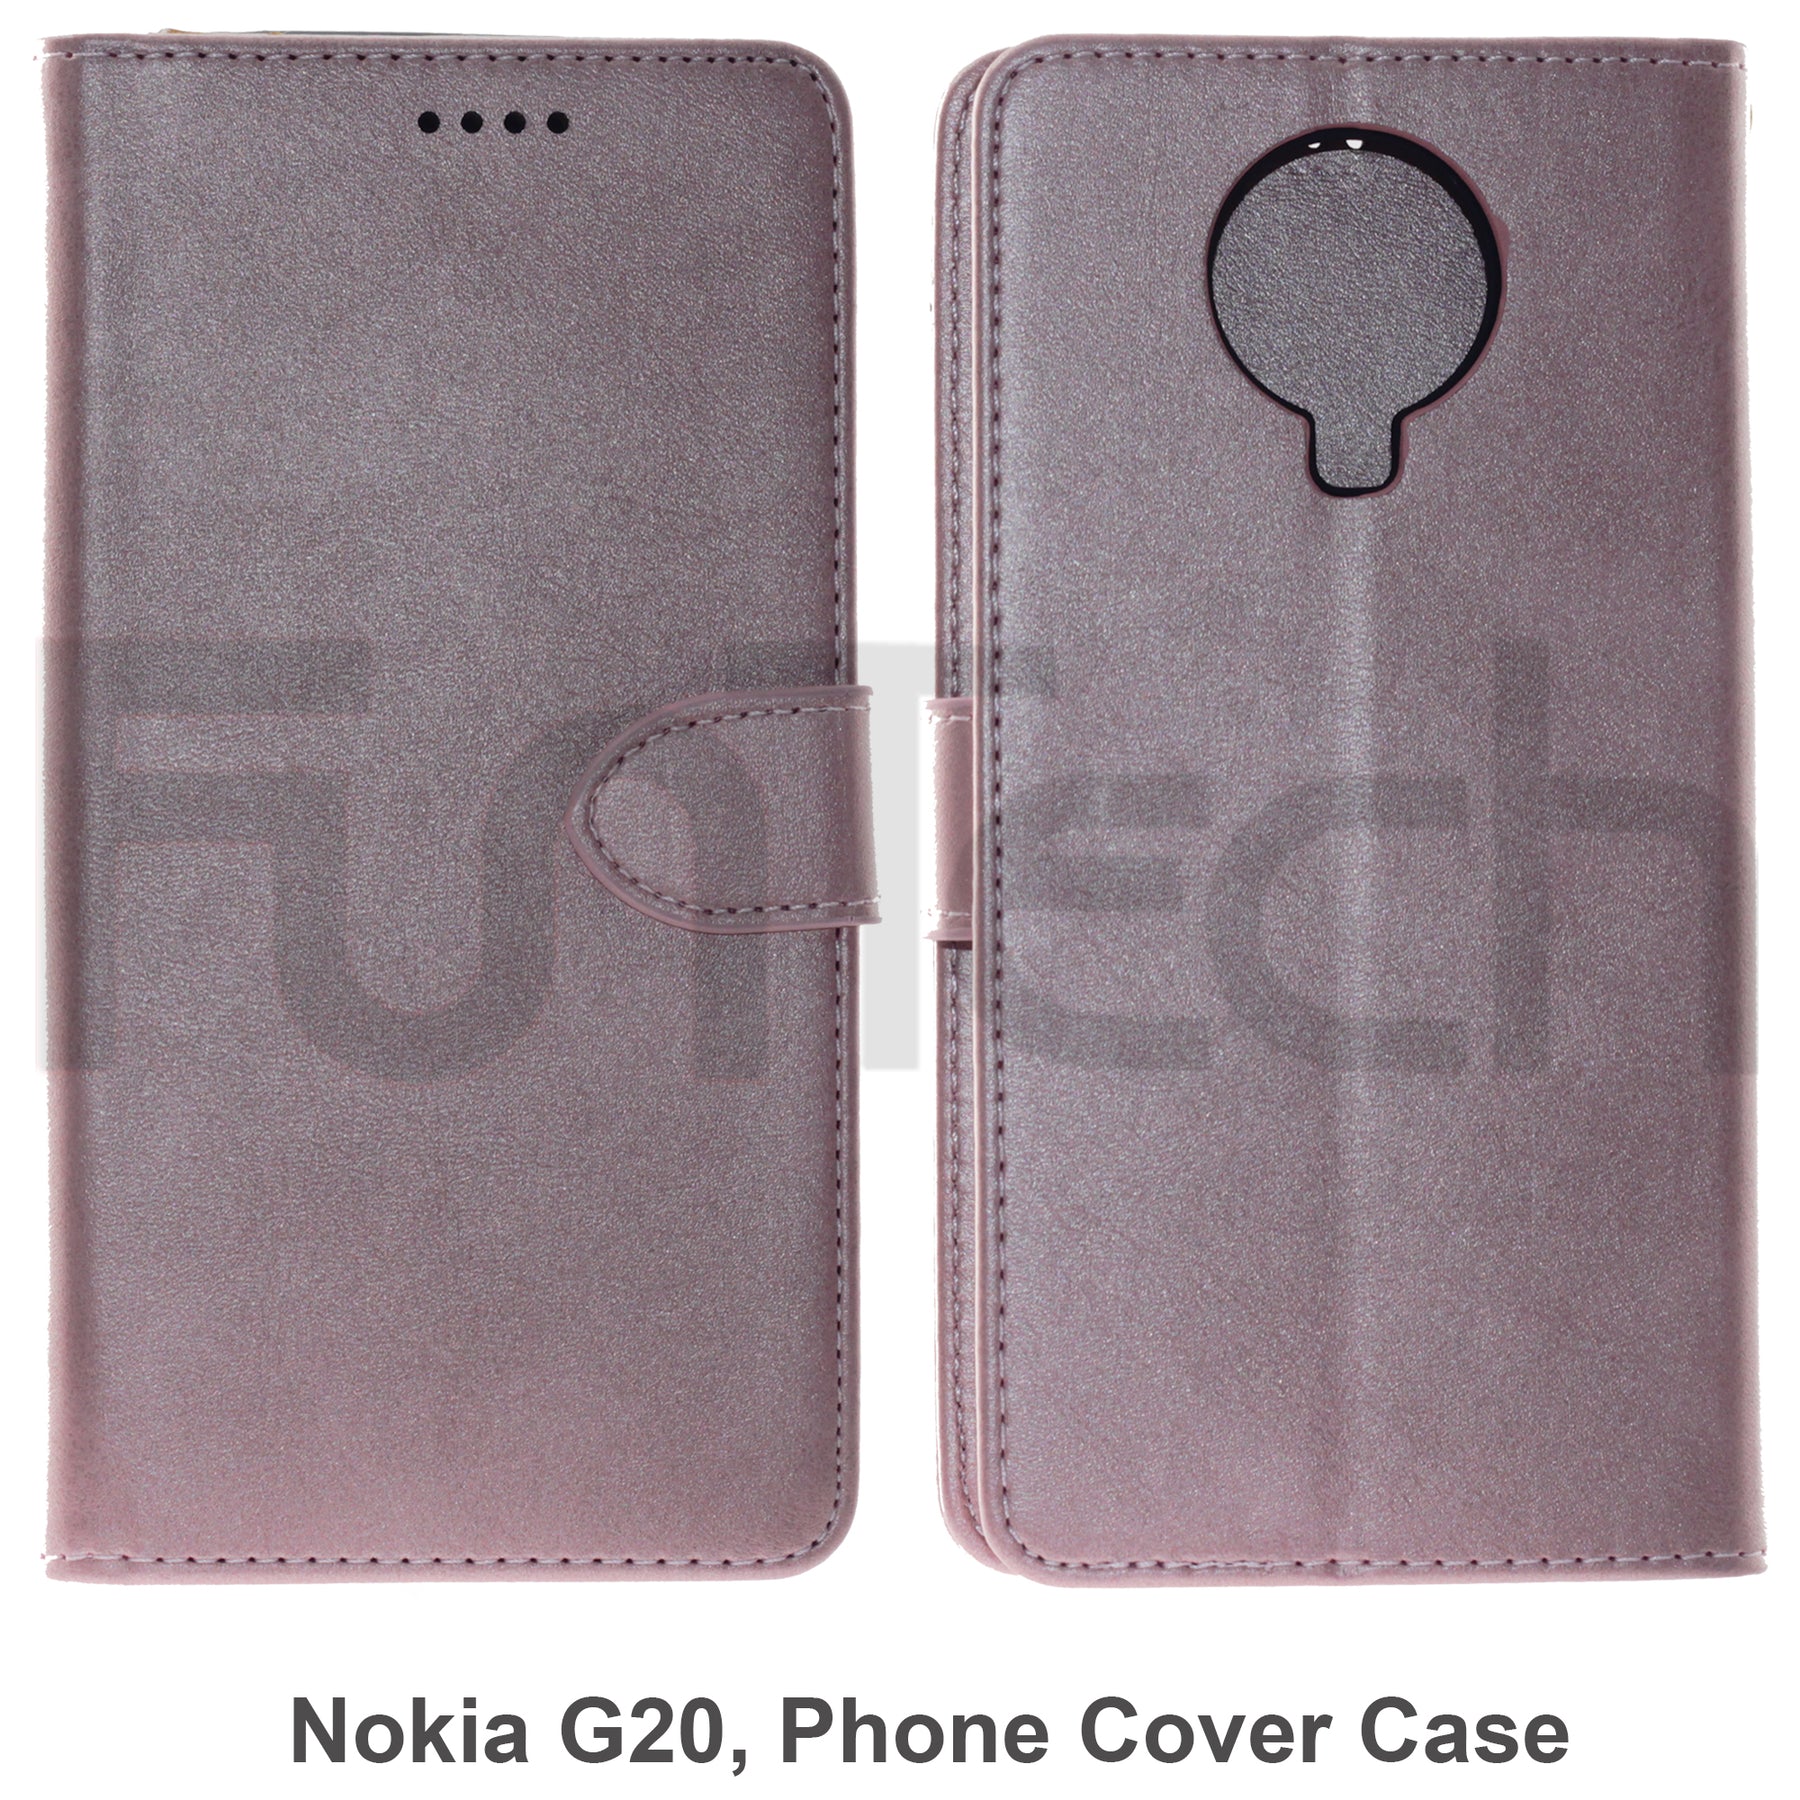 Nokia G20, Leather Wallet Case, Color Pink